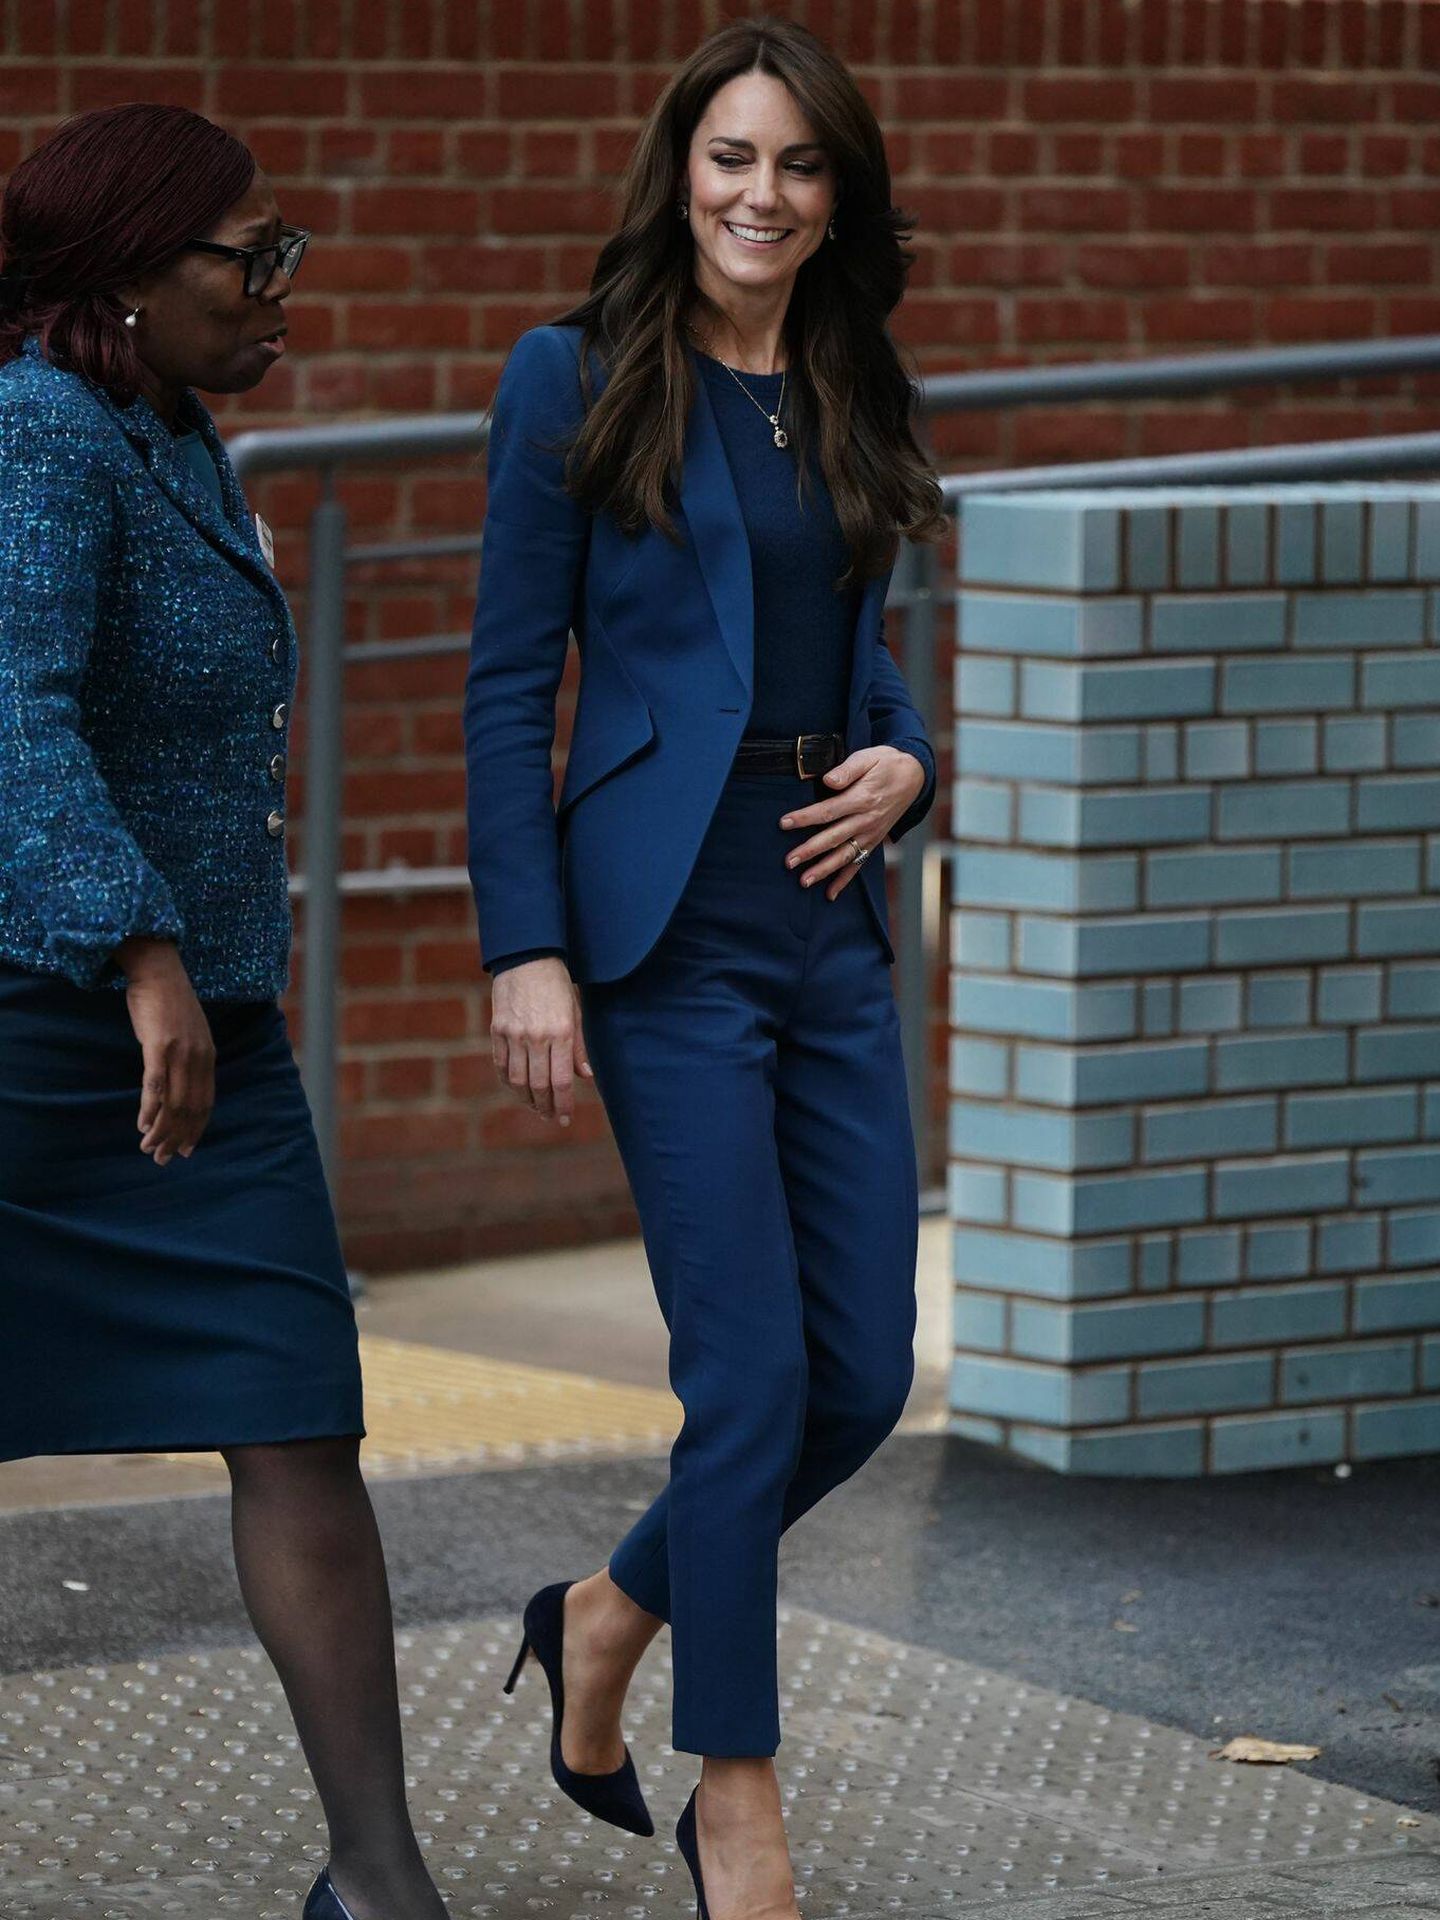  Kate Middleton luciendo 'power suit' de estreno. (Cordon Press) 